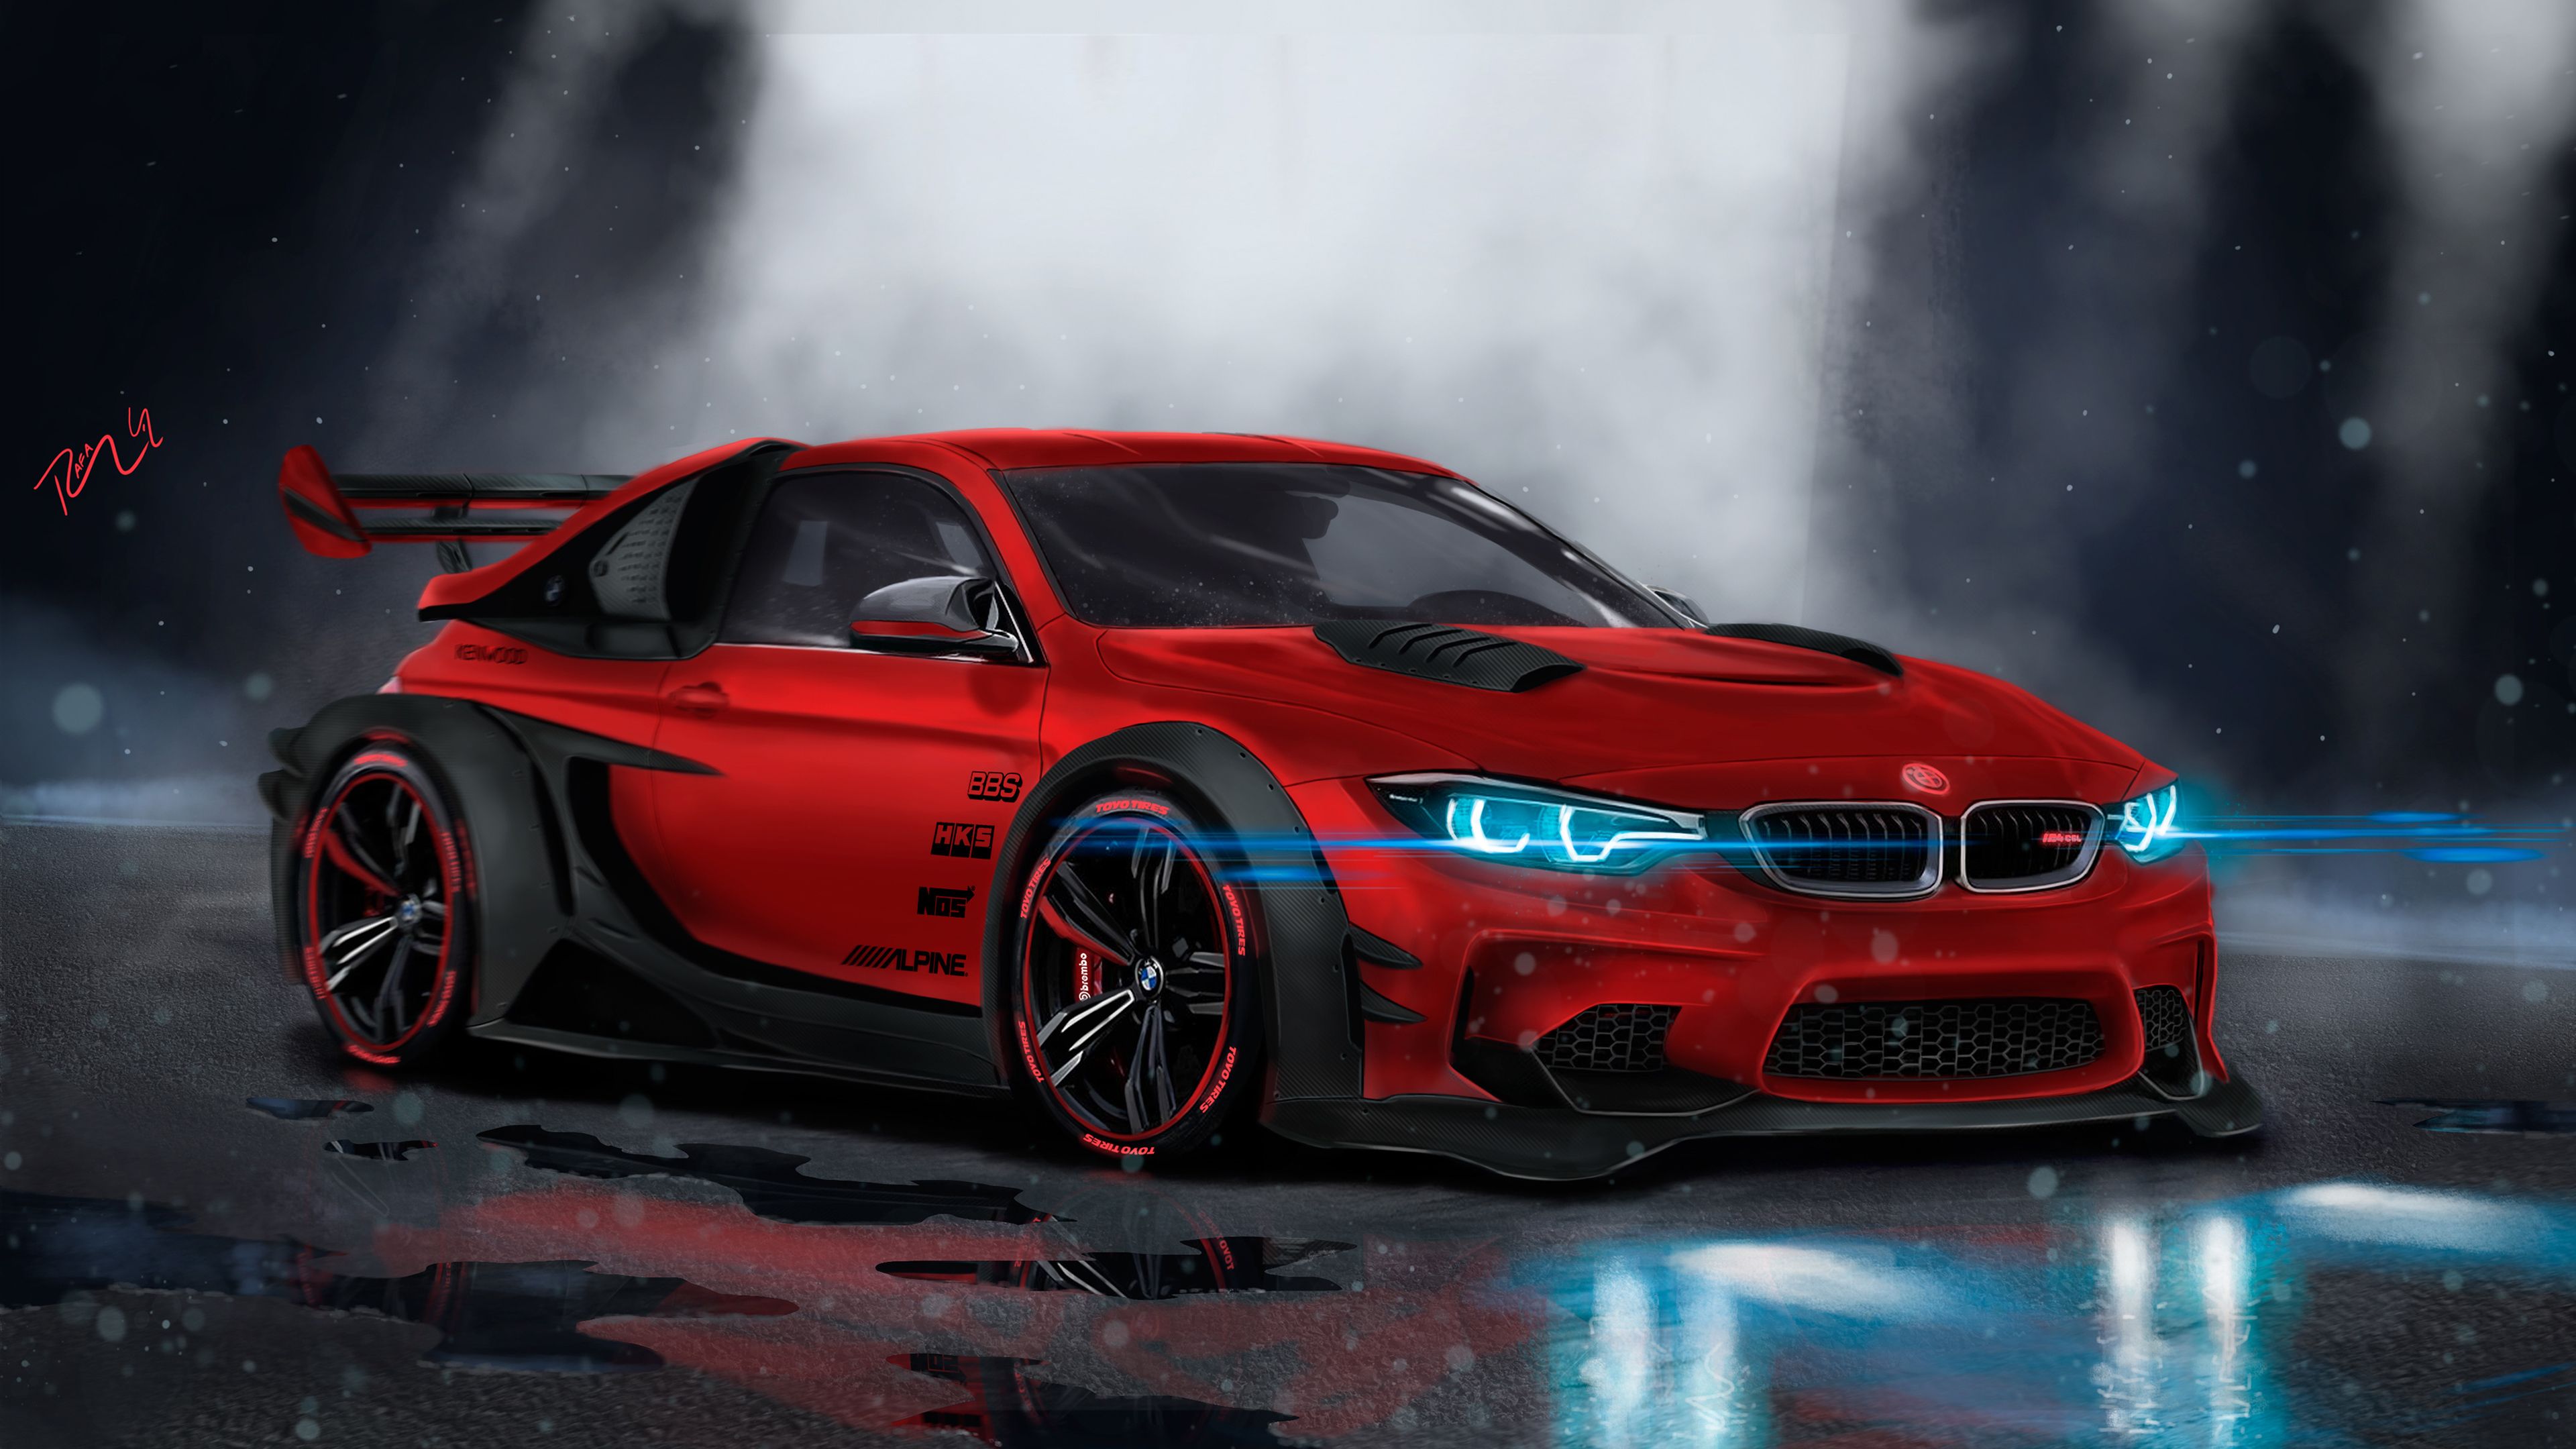 BMW Sports Car Wallpaper download